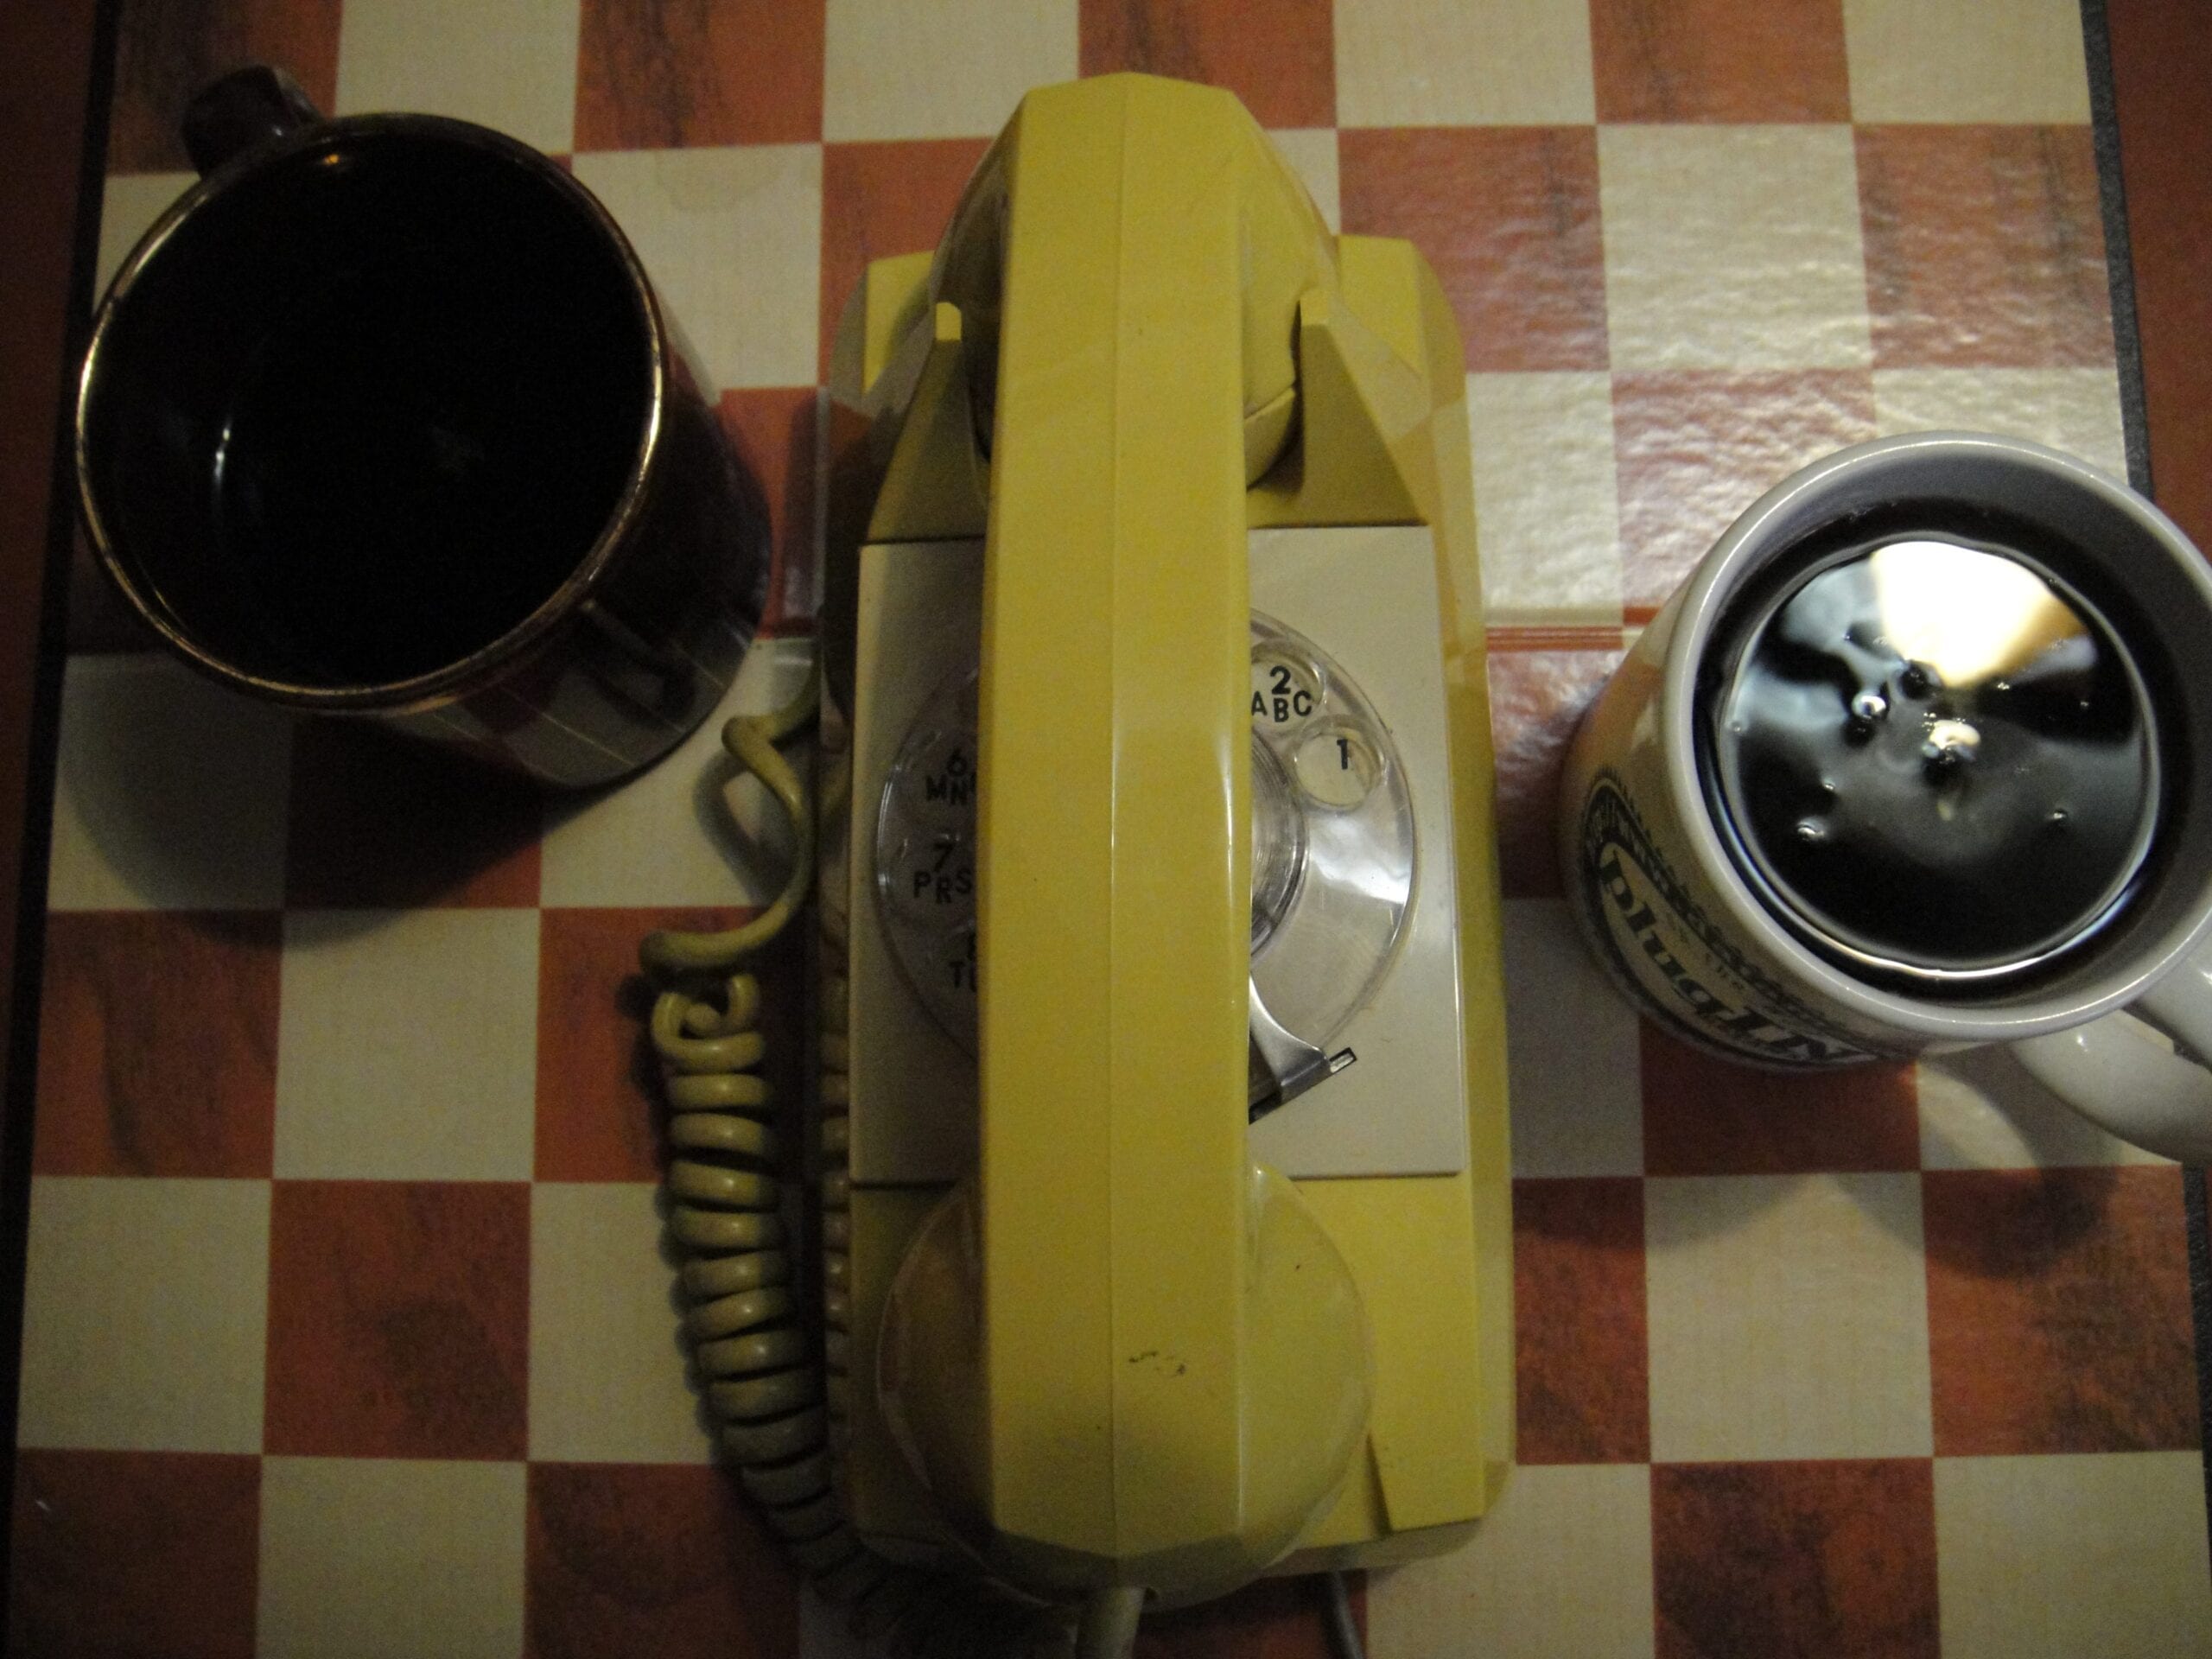 Coffee and Telephones